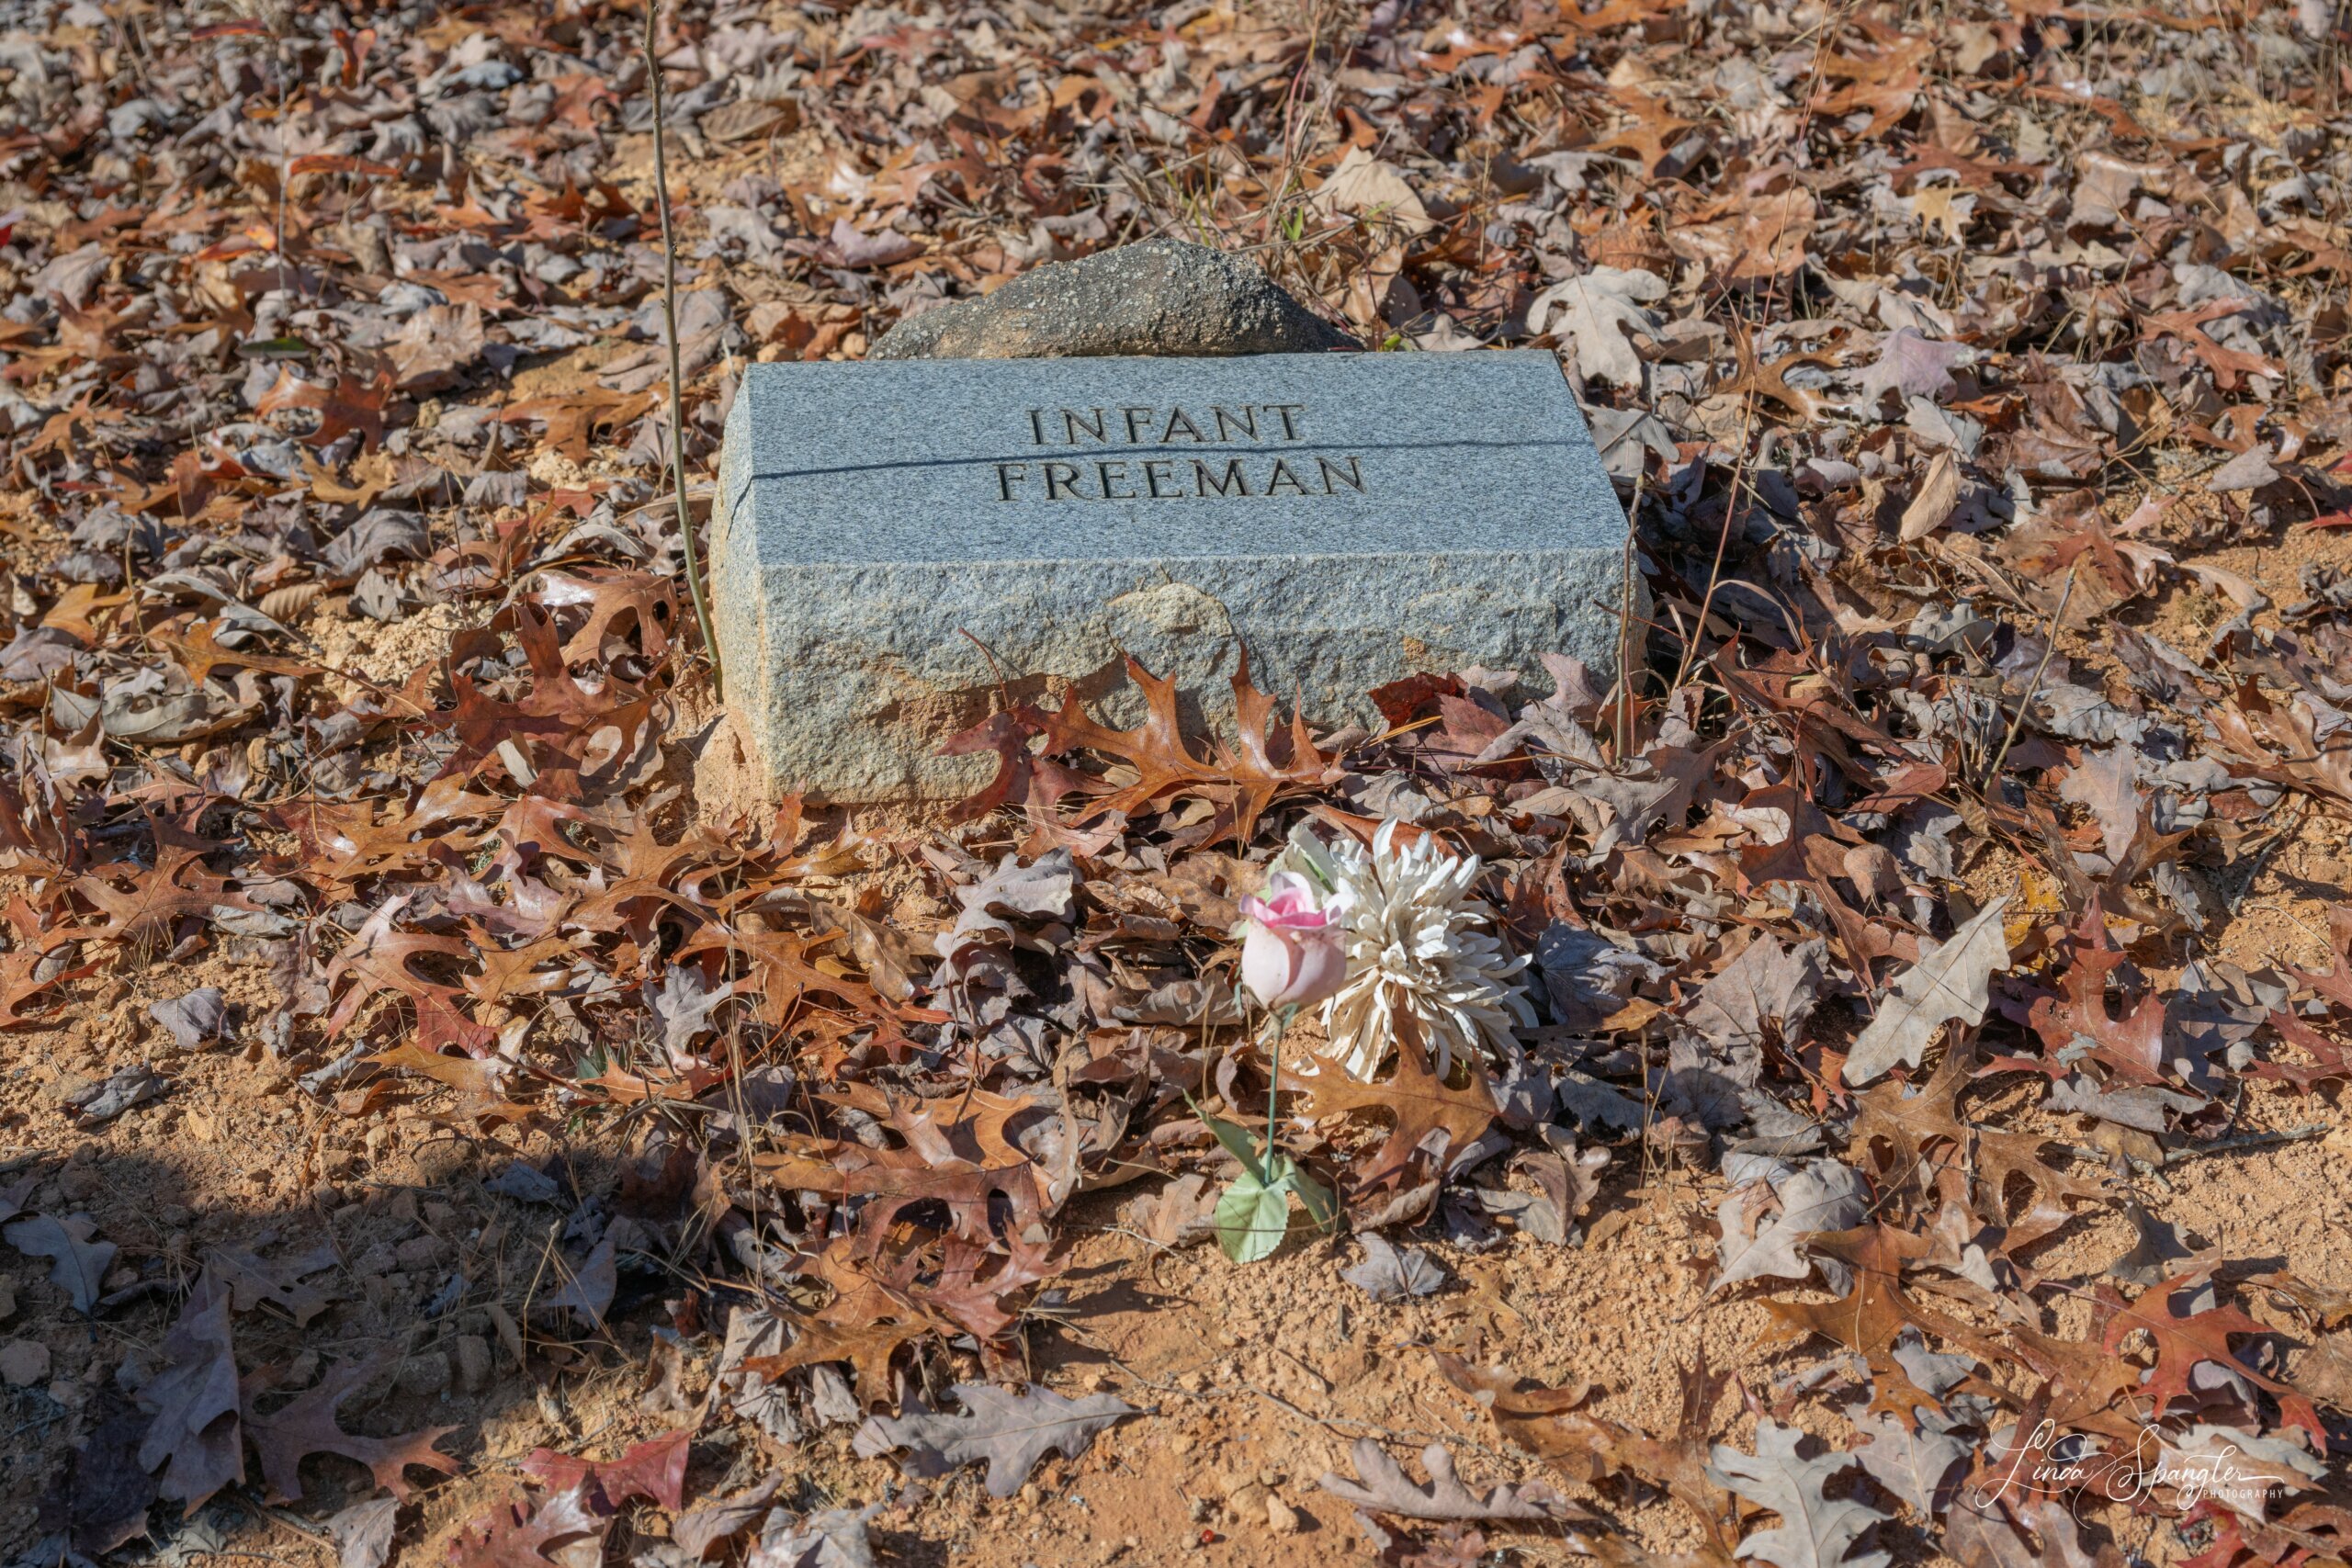 Infant Freeman headstone in Woody Cemetery